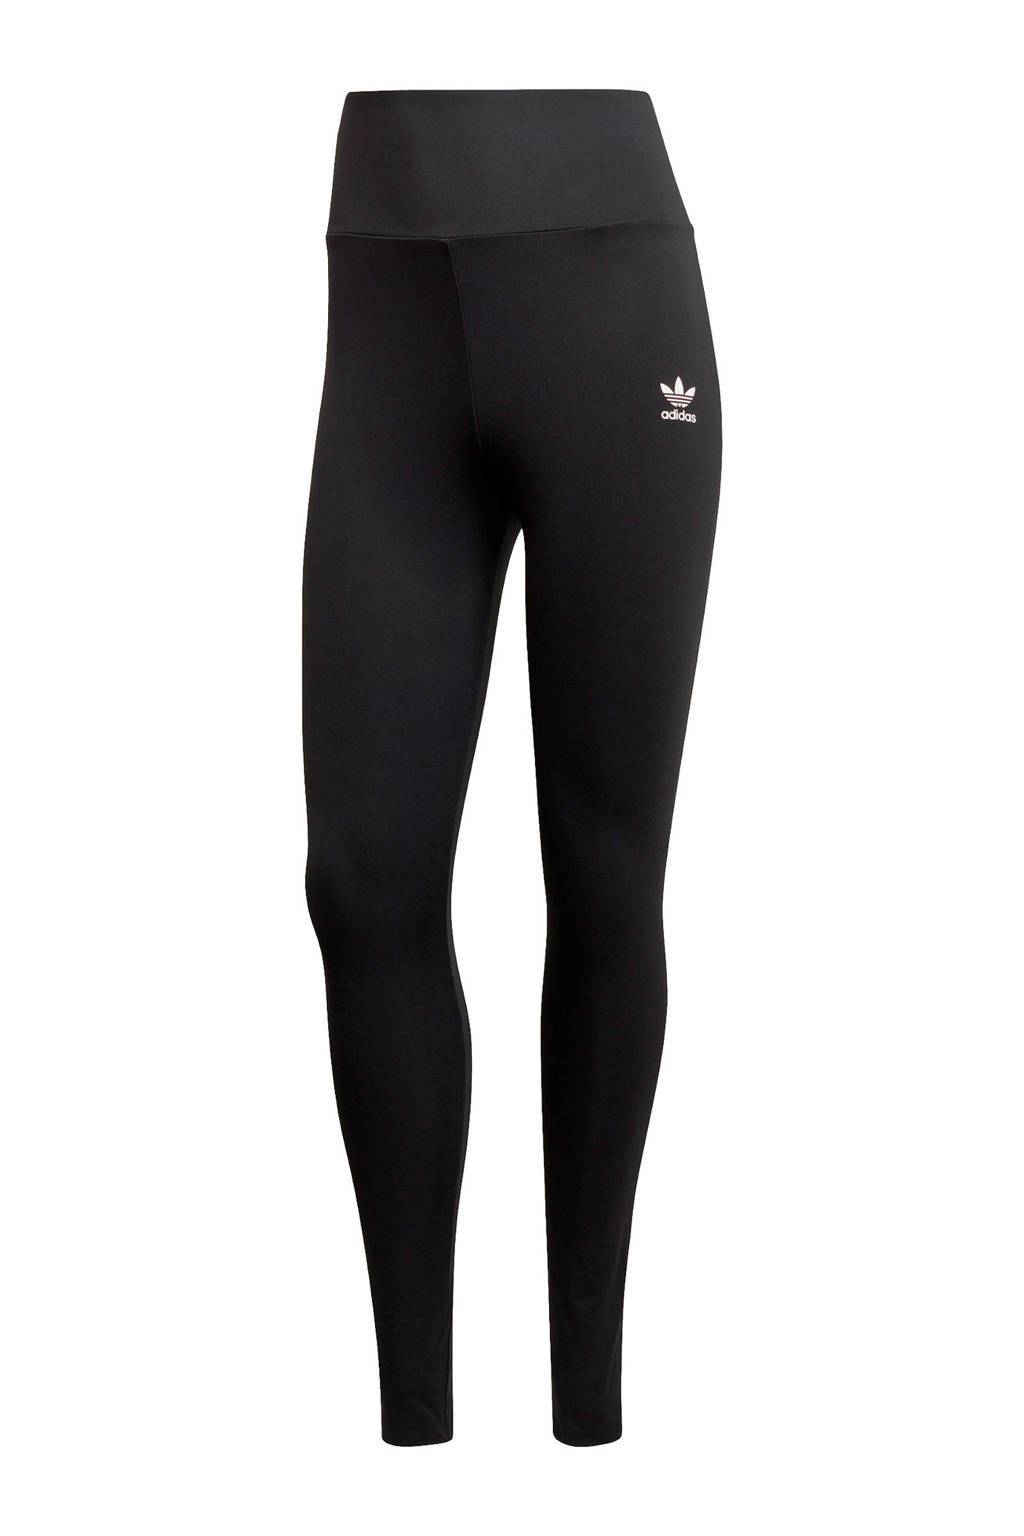 Zwarte dames adidas Originals legging van gerecycled polyester met slim fit, high waist en logo dessin